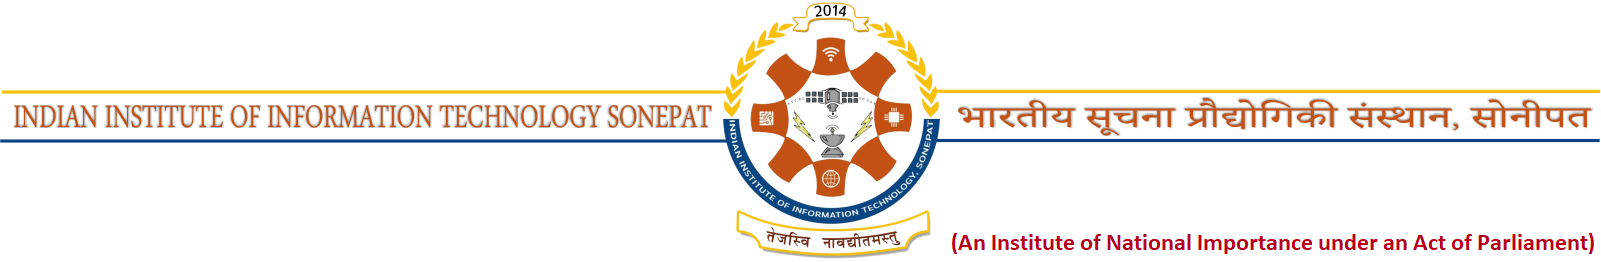 Indian Institute of Information Technology, Sonepat-logo